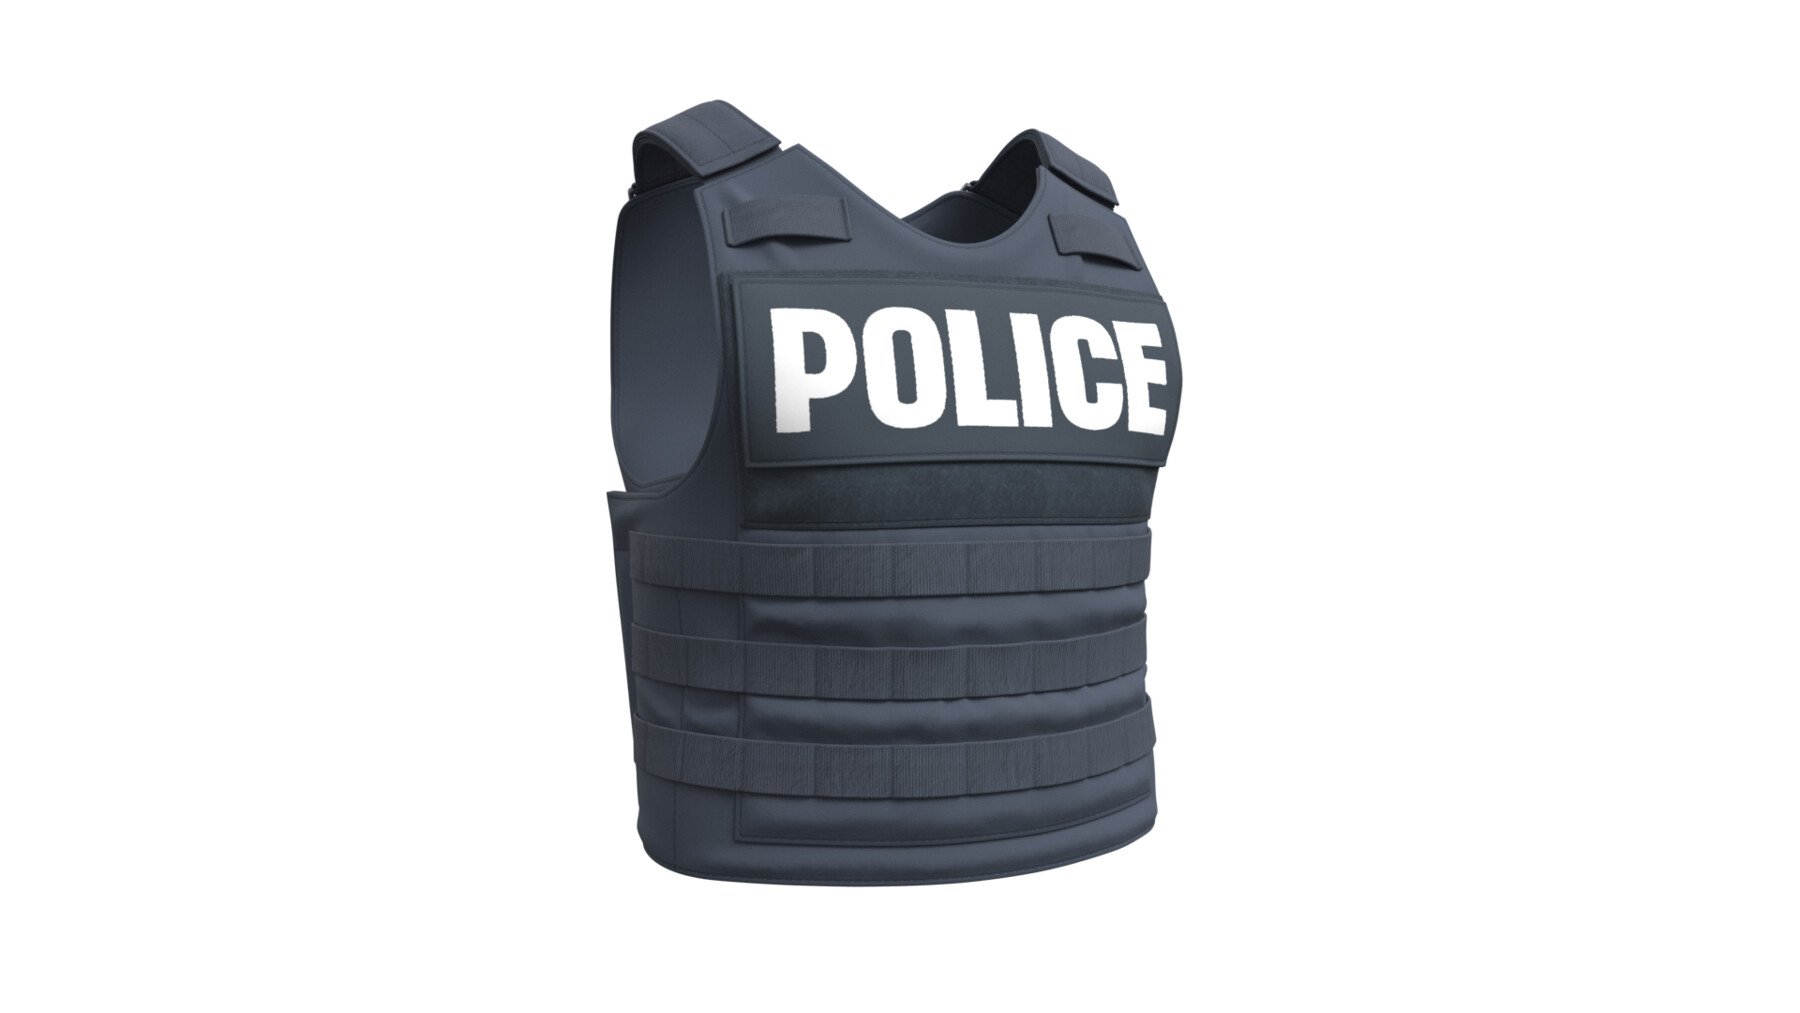 police bulletproof vest carriers